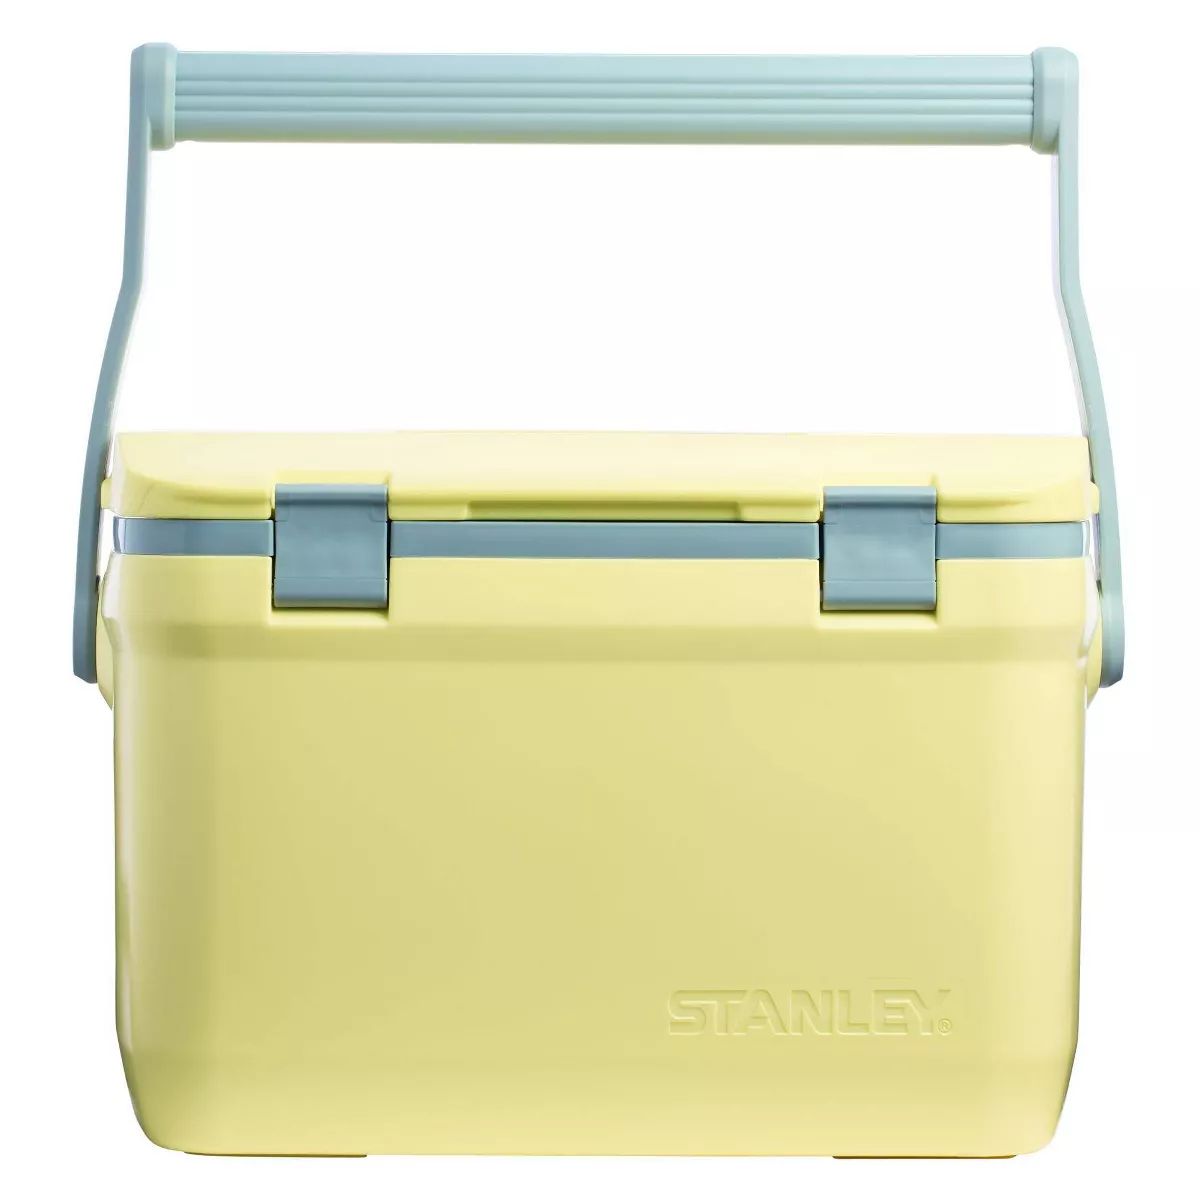 Stanley 16qt Plastic Easy-Carry Outdoor Cooler | Target